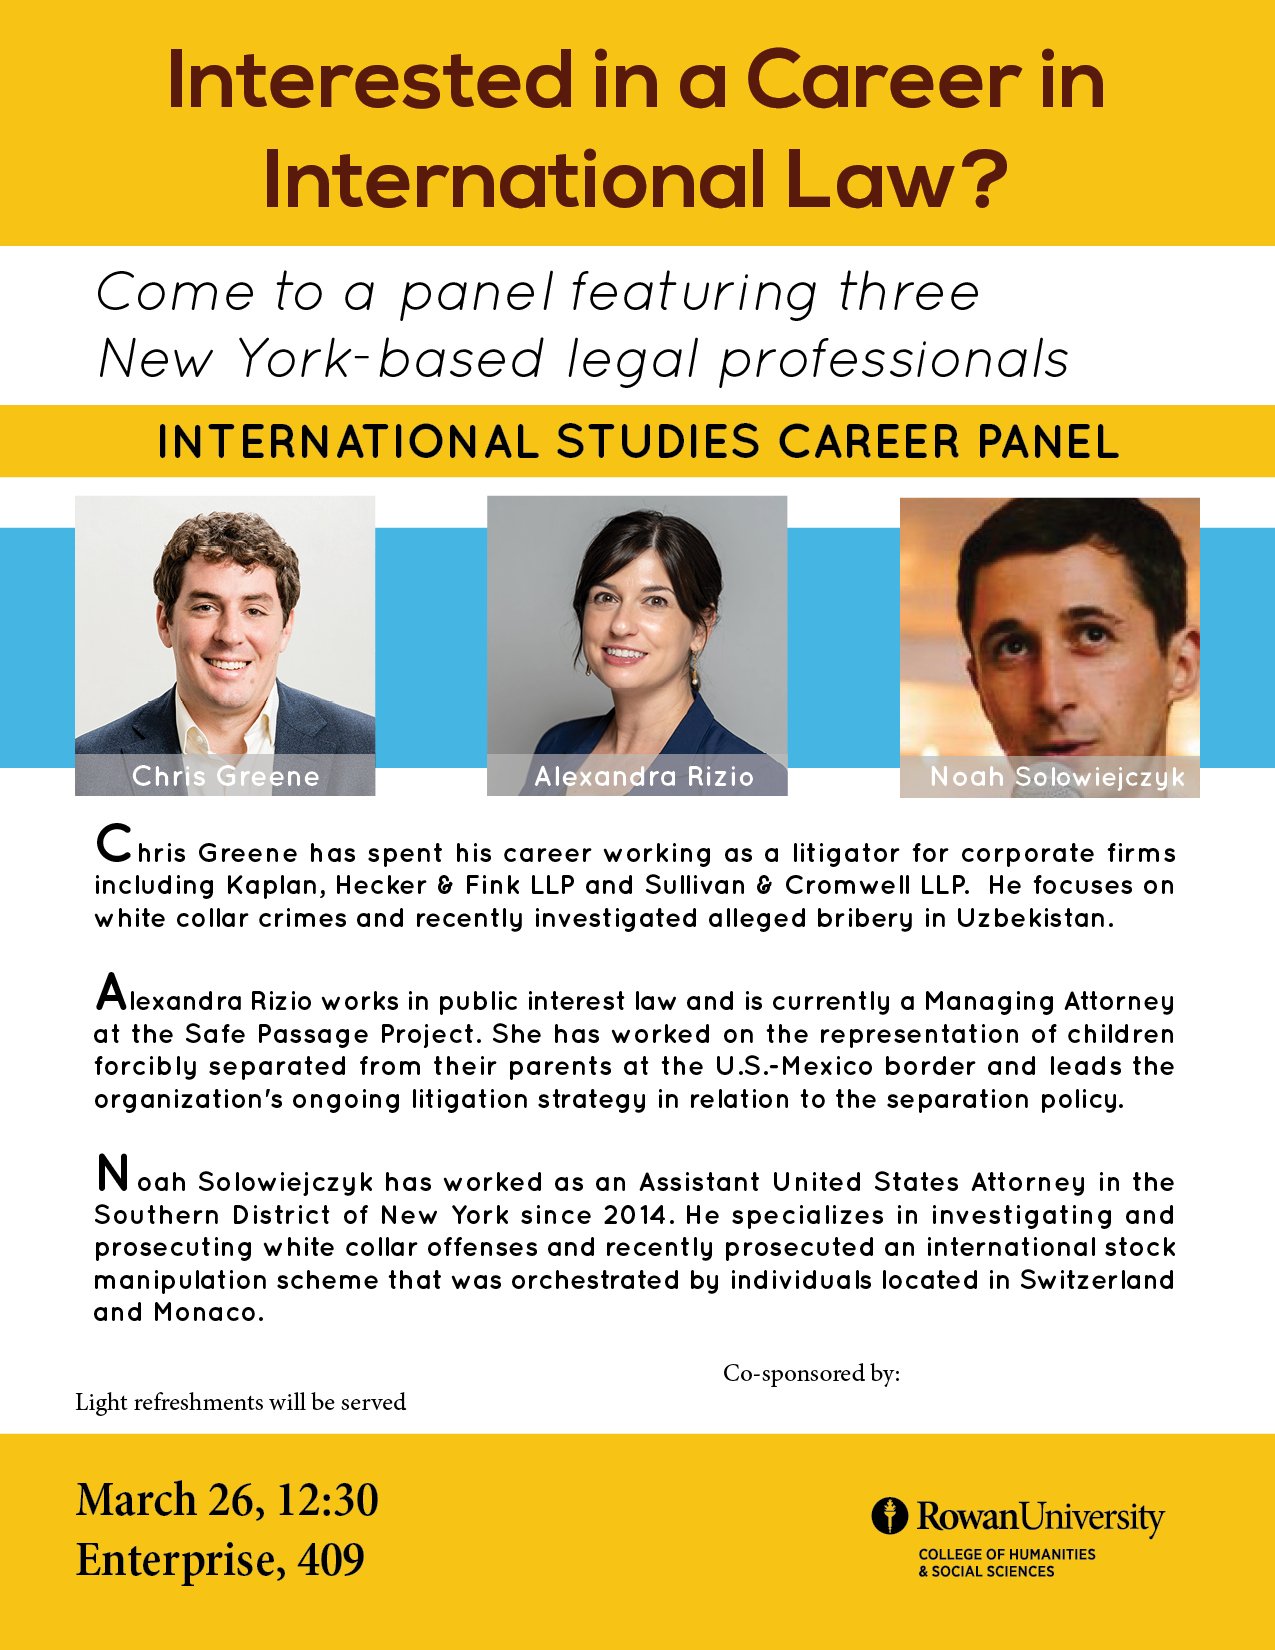 International Studies Career Panel